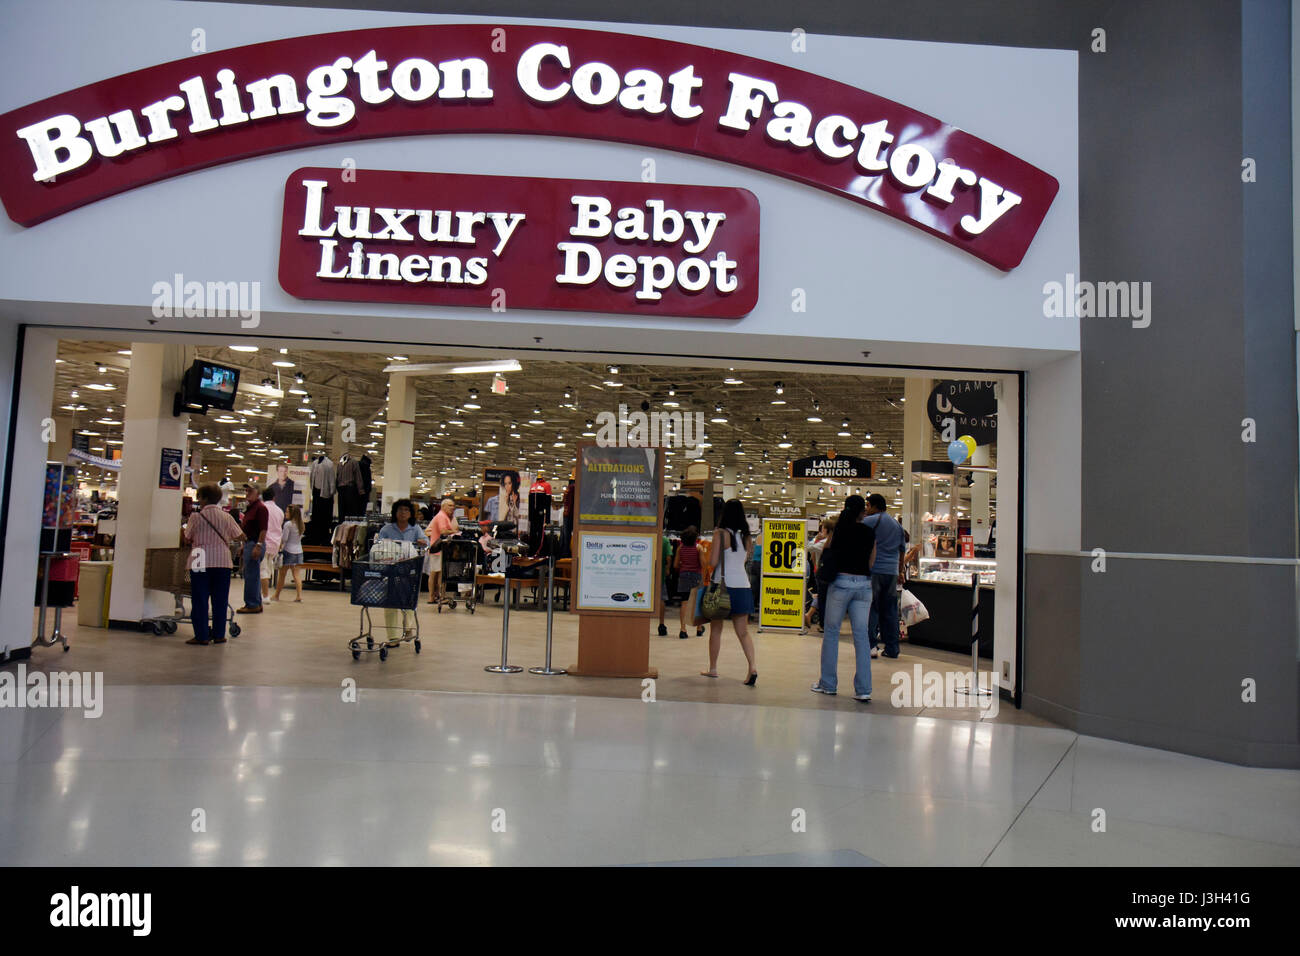 Miami Florida Dolphin Mall Burlington Coat Factory outlet store woman Stock Photo, Royalty Free ...